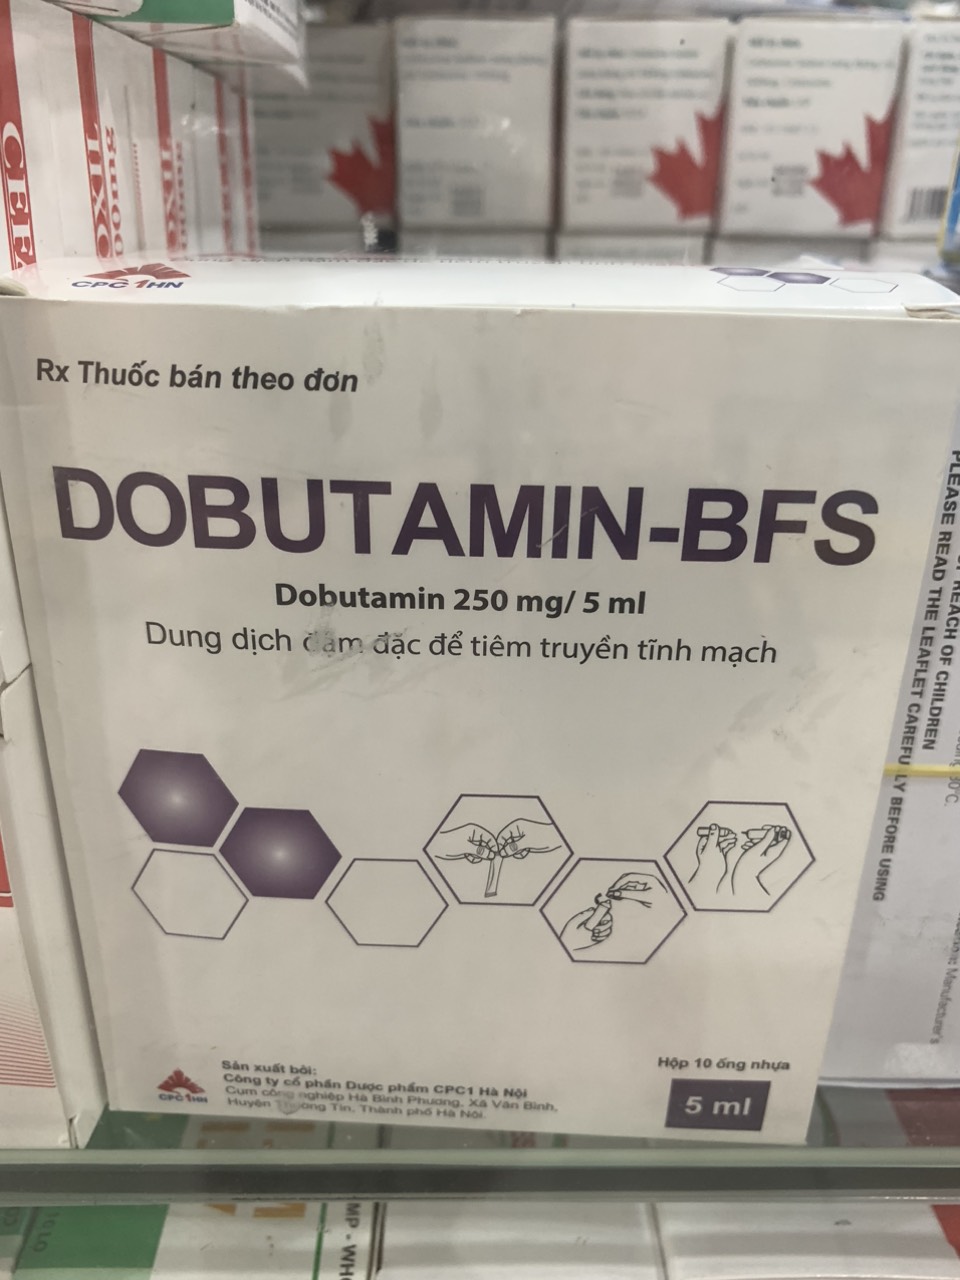 Dobutamin - BFS